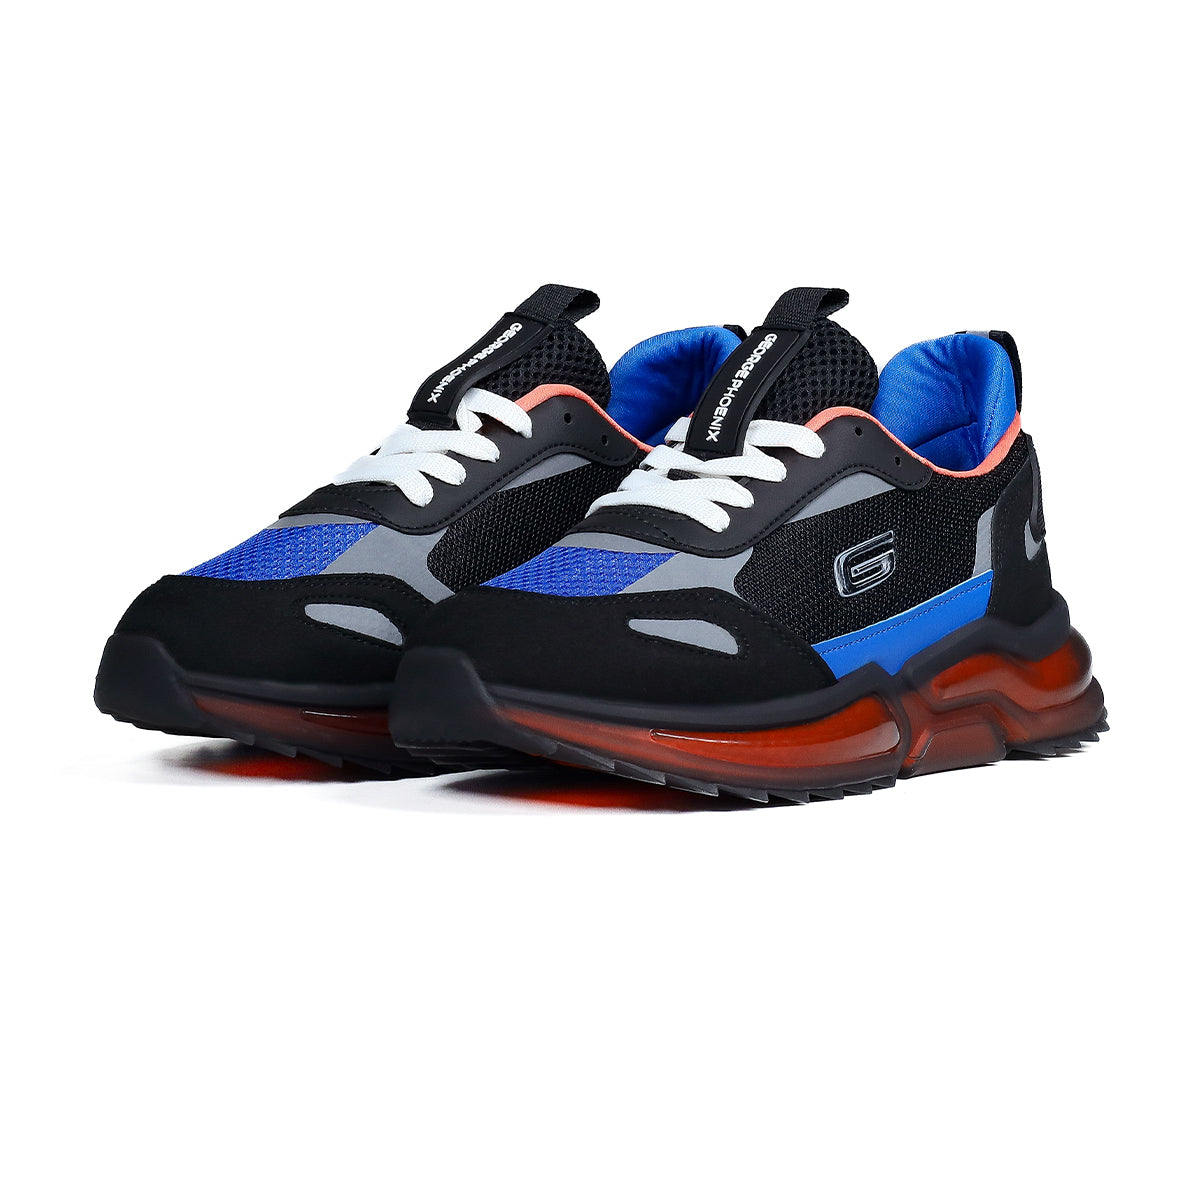 DI MILANO Siyah Turuncu Mavi Erkek Sneakers Spor Ayakkabı